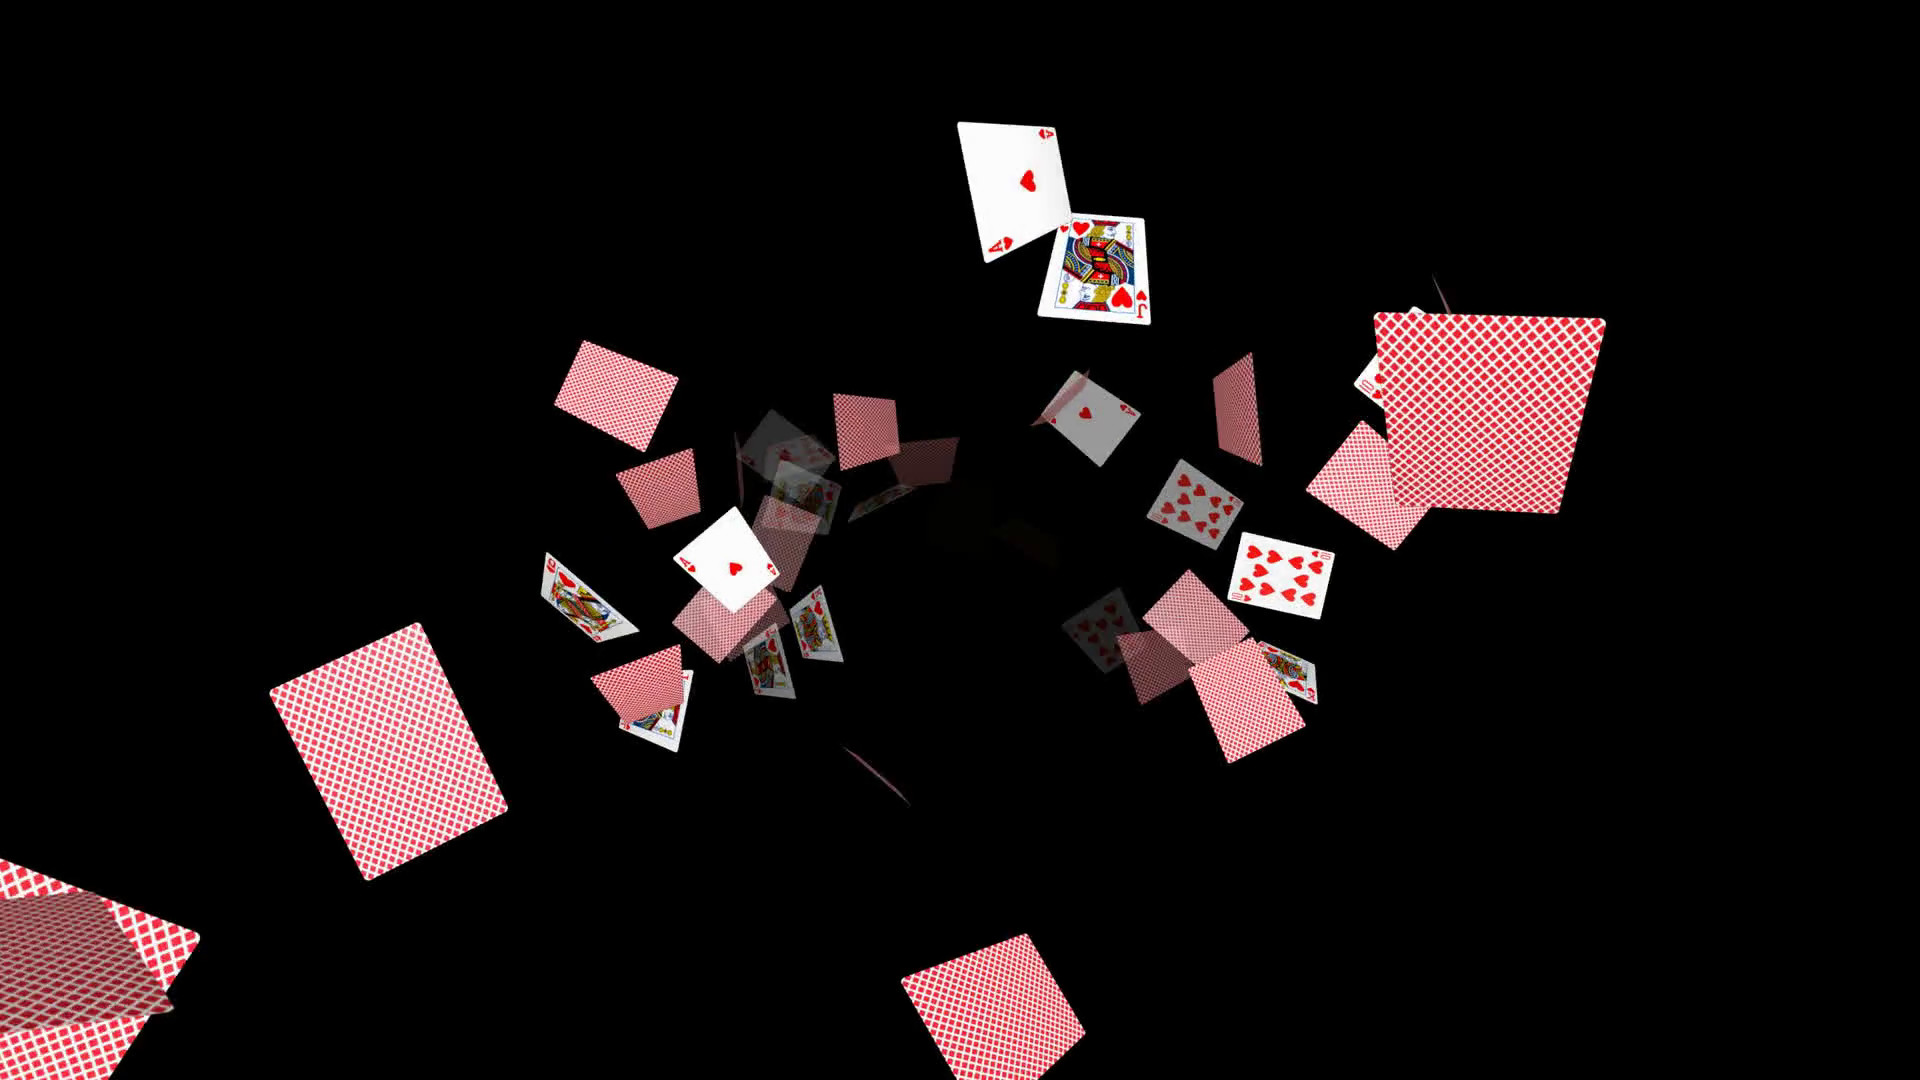 1920x1080 Flying poker cards on black background - loop, red hearts, 10, J, Q, K, A  Motion Background - VideoBlocks